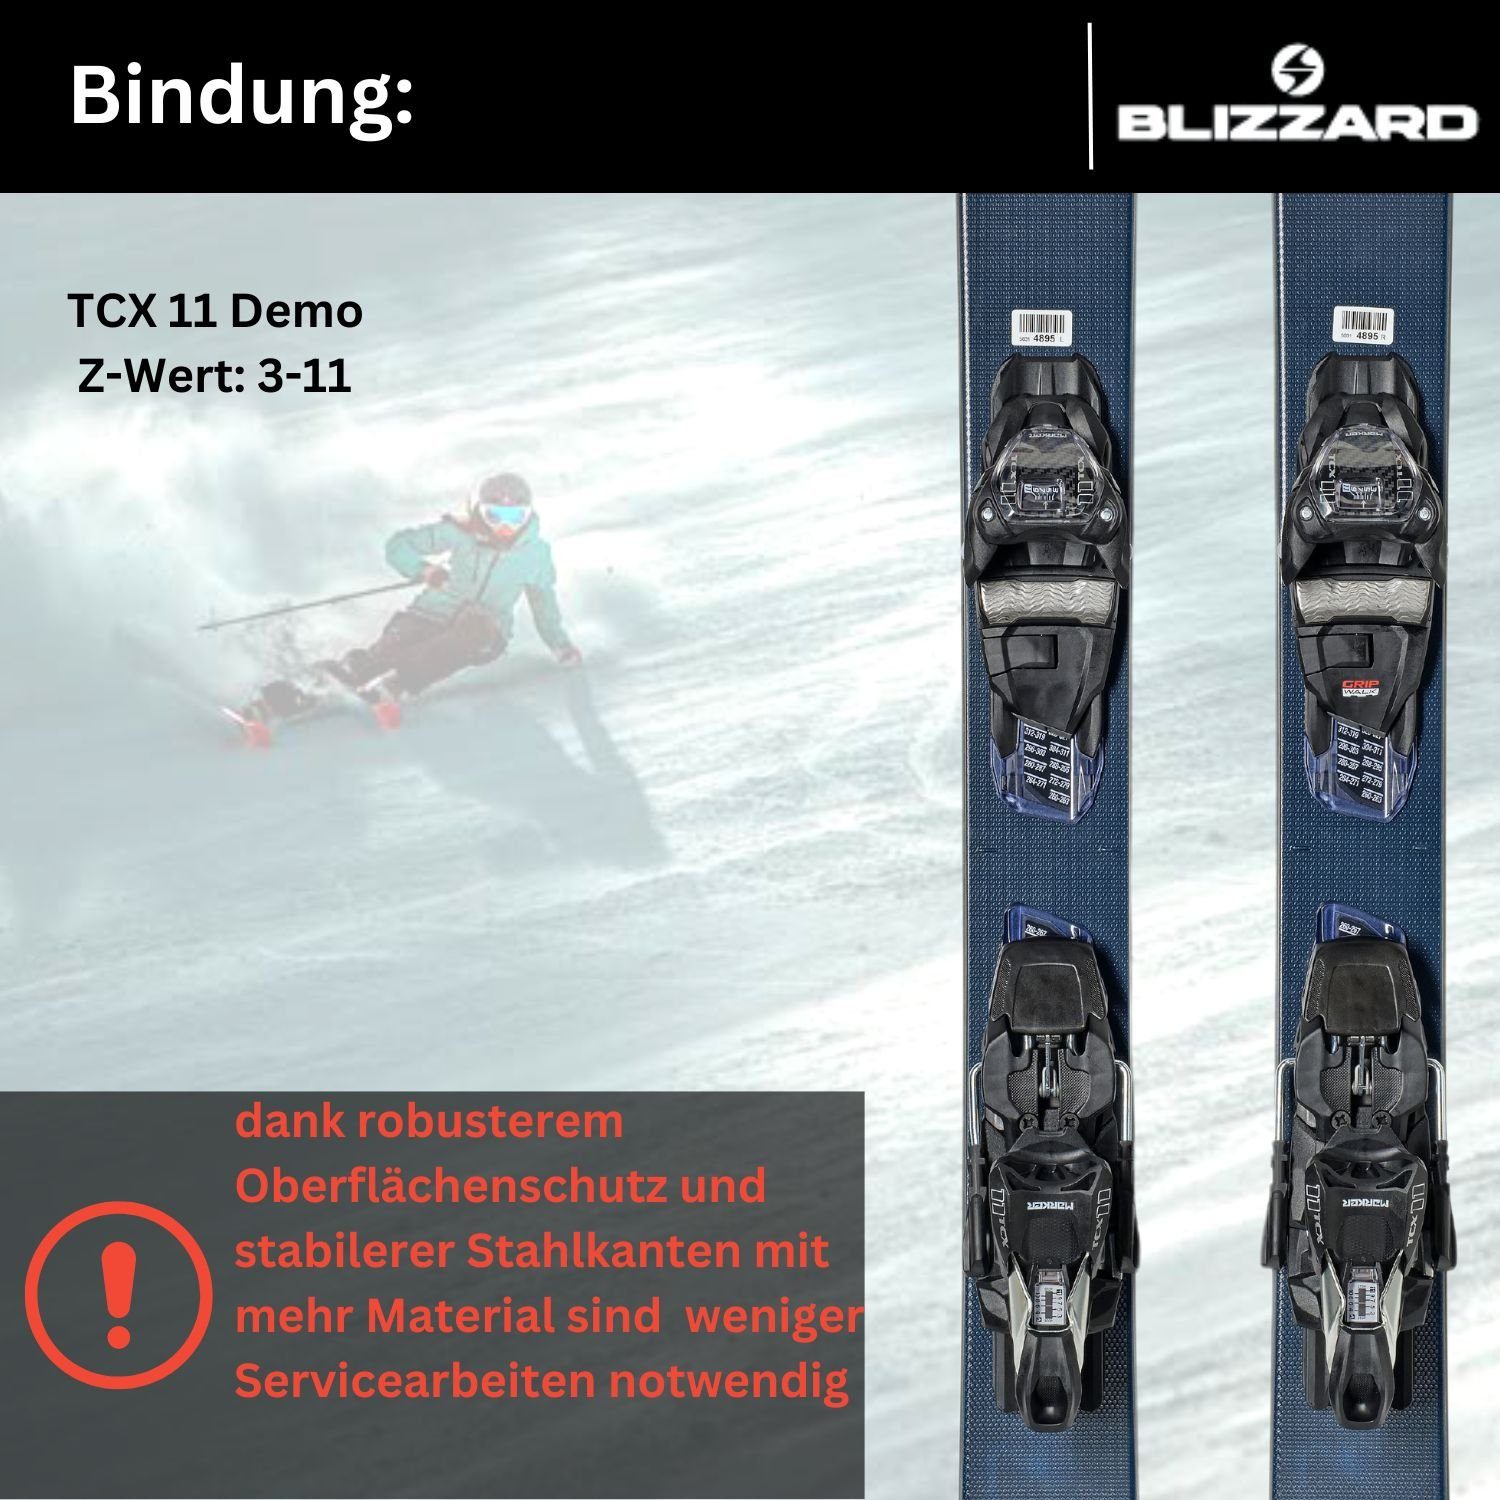 Head 2024 e.XSR Ski, + Z3-11 Head Bindung Alpinski Ski LYT Rebels WC SW PR11 GW